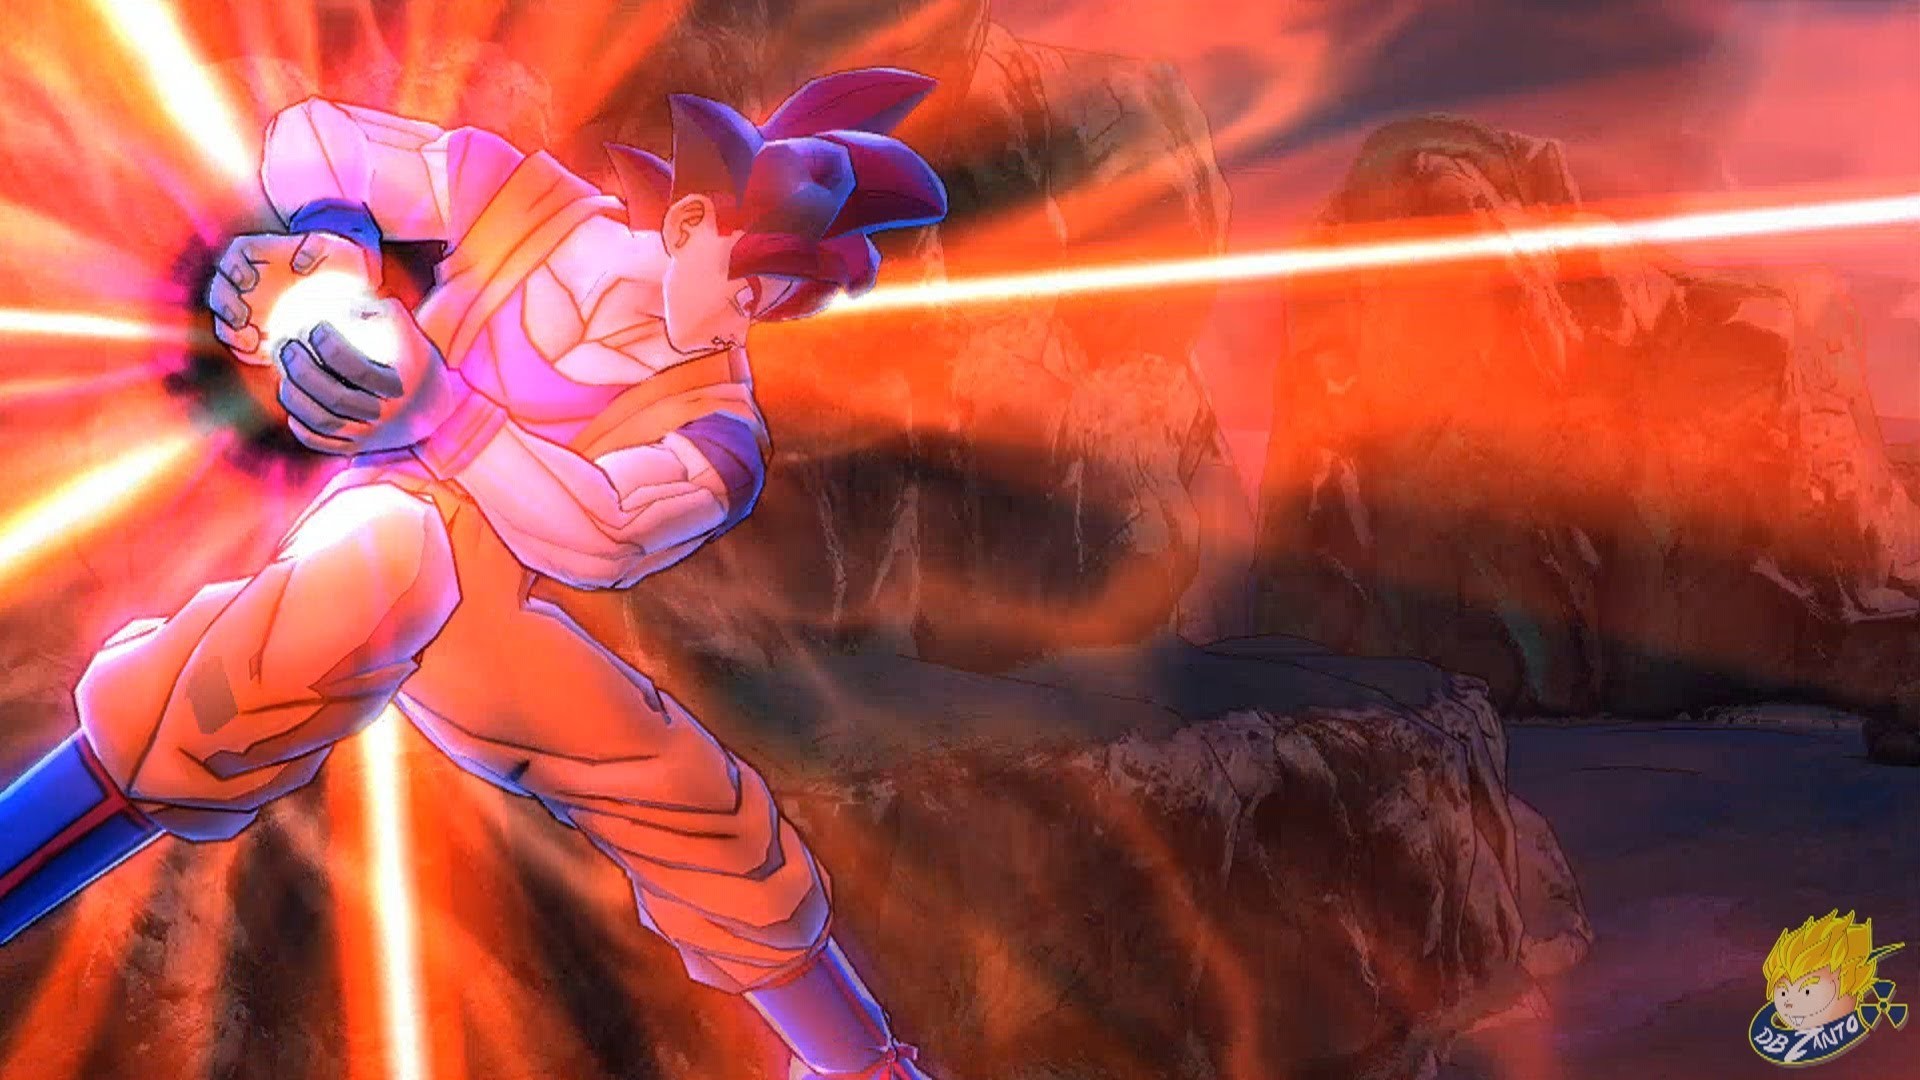 1920x1080 Dragon Ball Z: Battle of Z - | Super Saiyan God Goku Vs God of Destruction  Beerus/ Bills |ãFULL HDã - YouTube